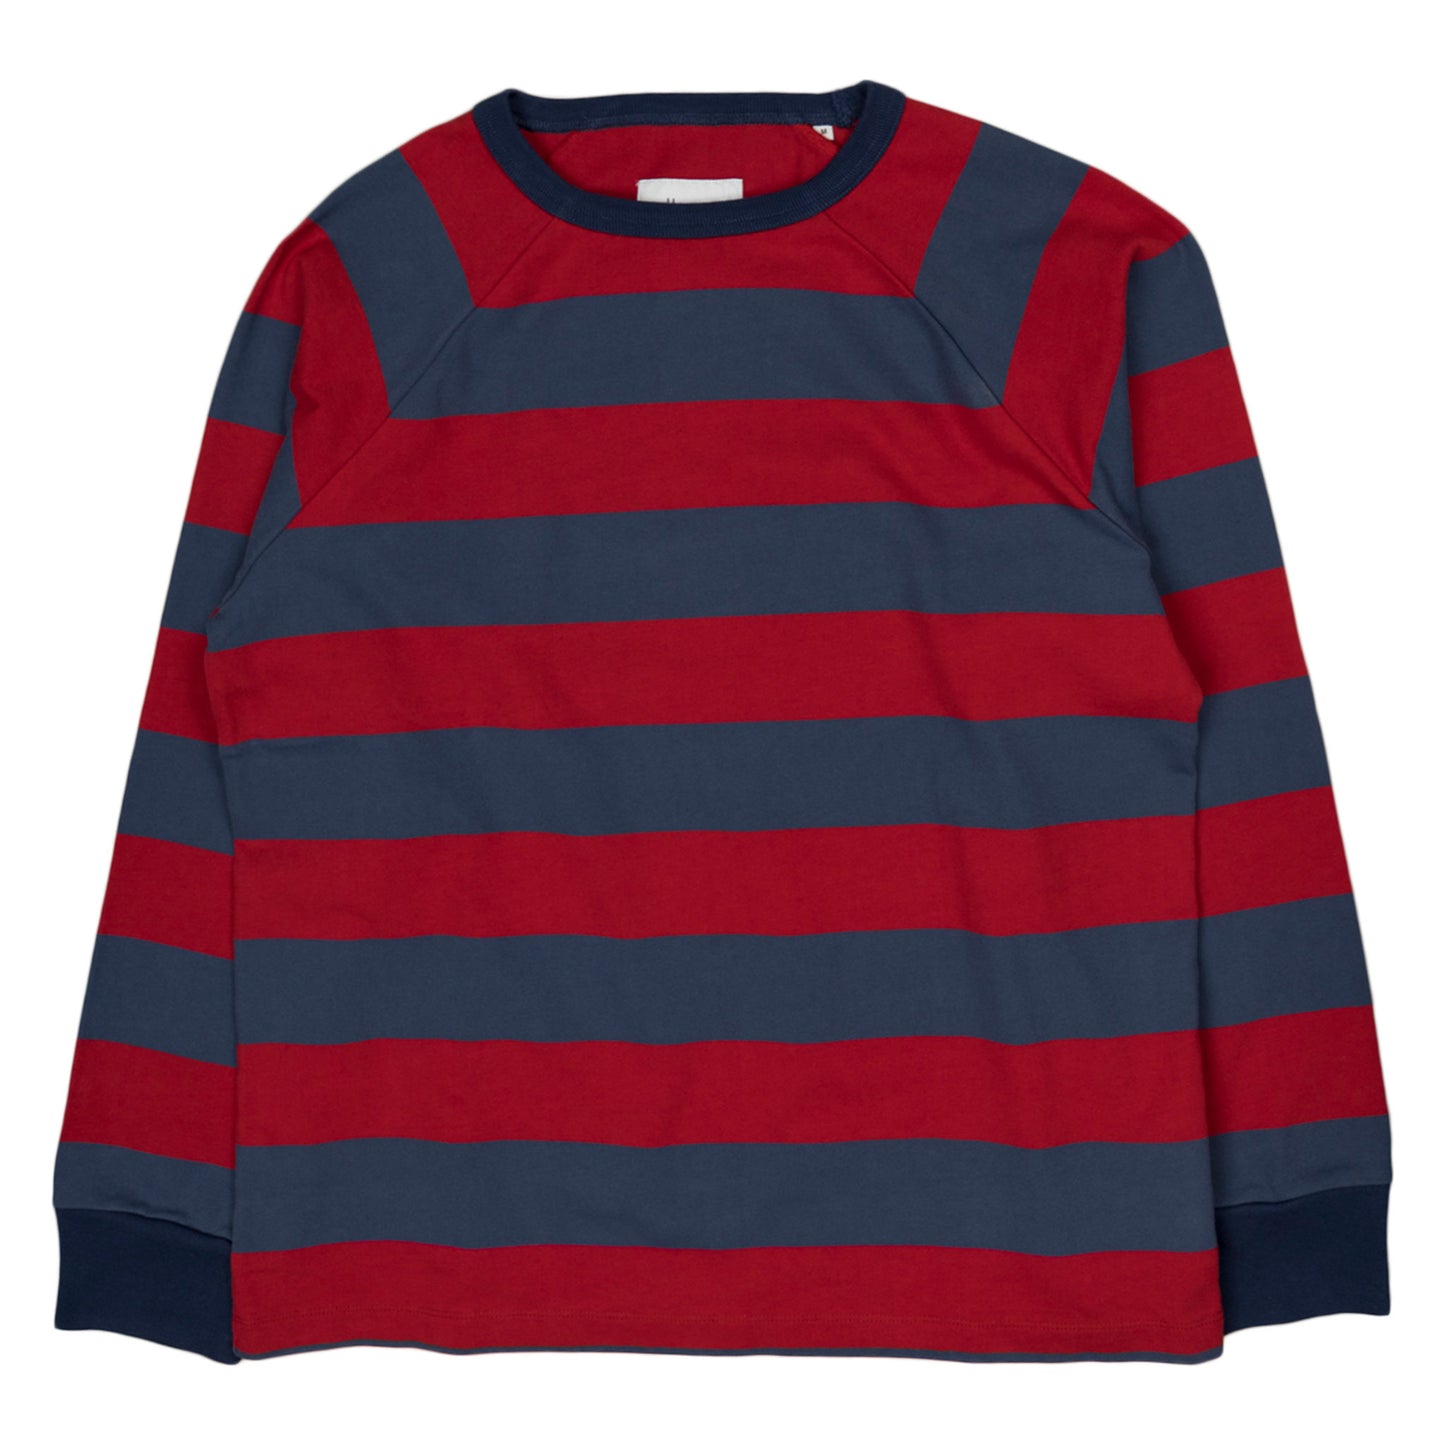 Albam Raglan Striped Sweatshirt in Red and Navy